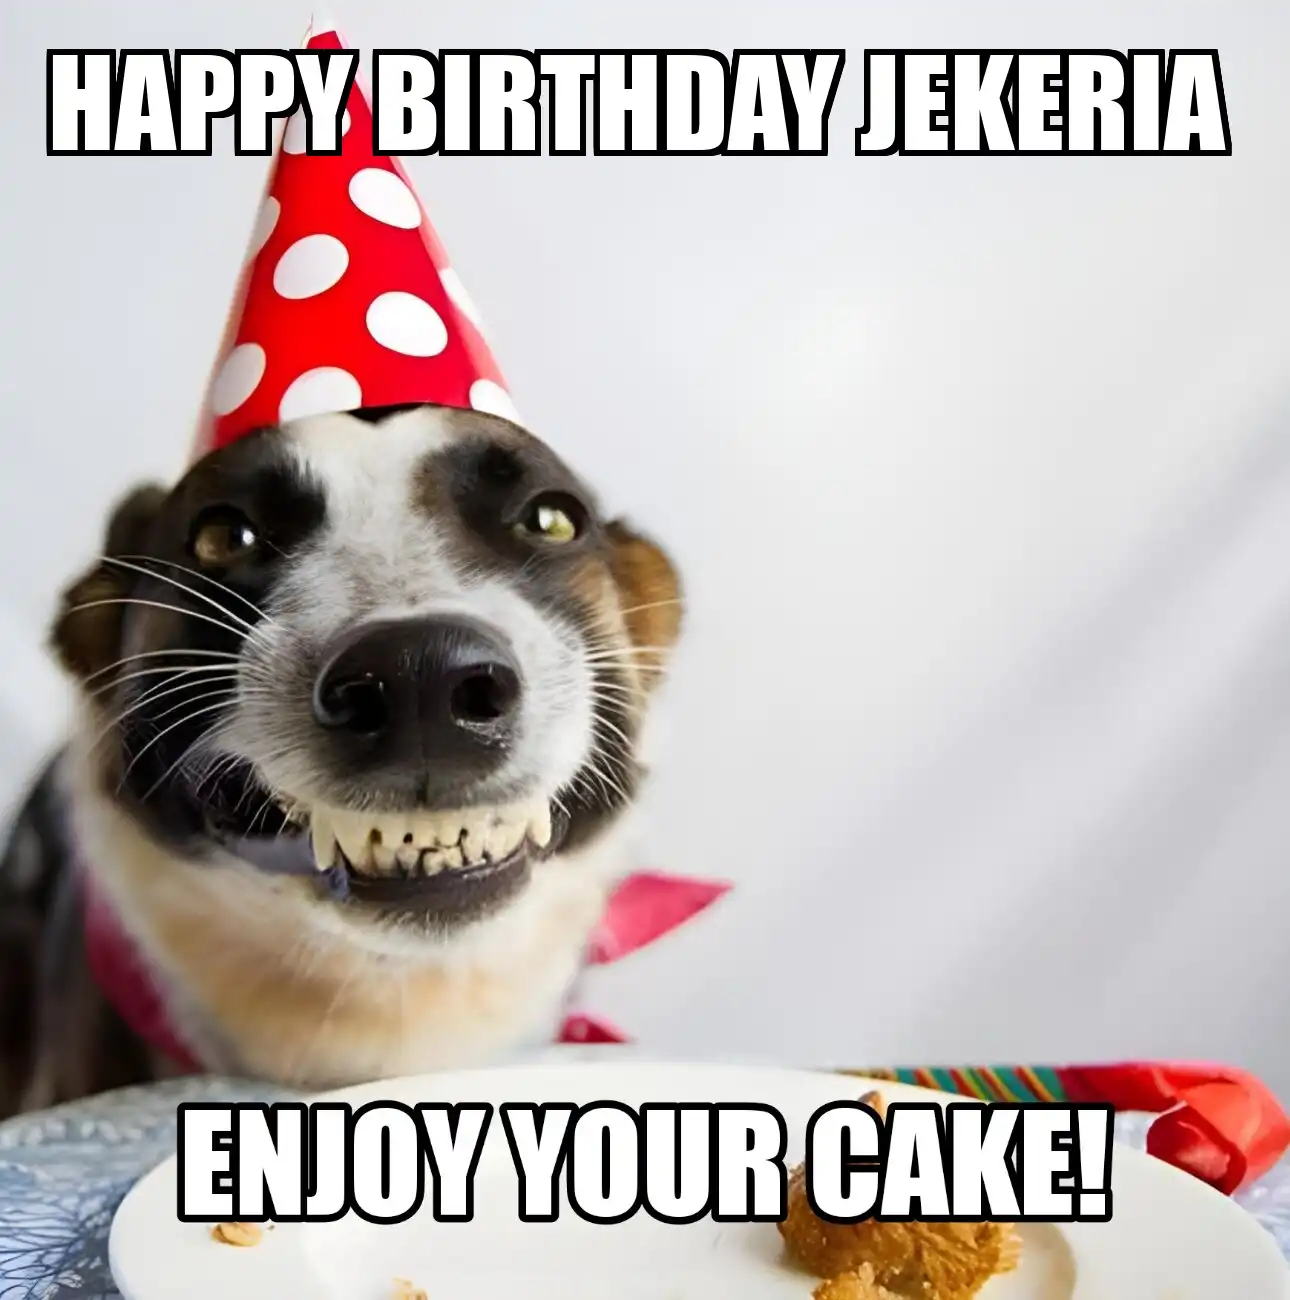 Happy Birthday Jekeria Enjoy Your Cake Dog Meme